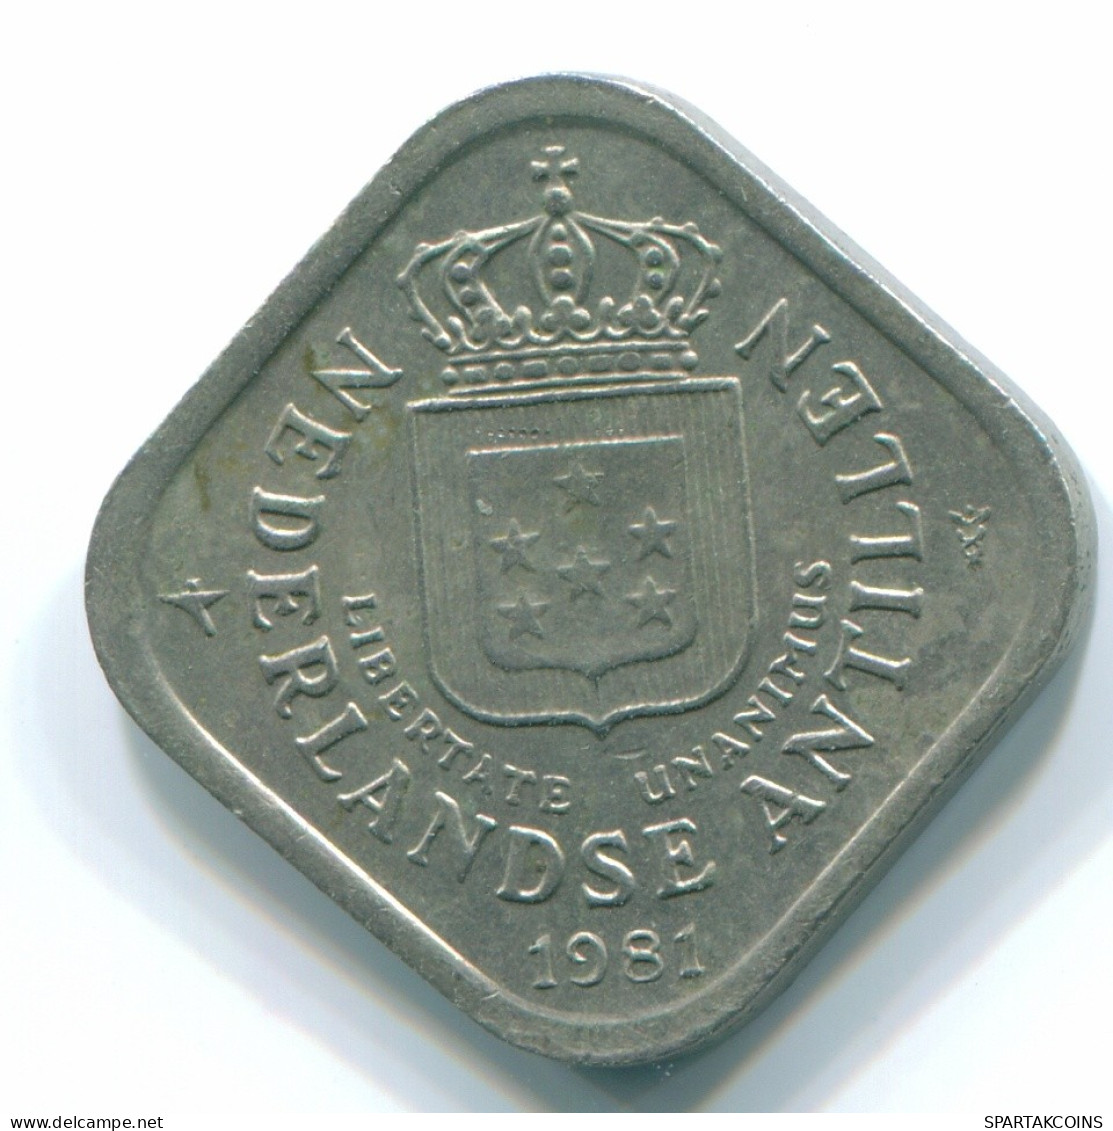 5 CENTS 1981 NETHERLANDS ANTILLES Nickel Colonial Coin #S12345.U.A - Nederlandse Antillen